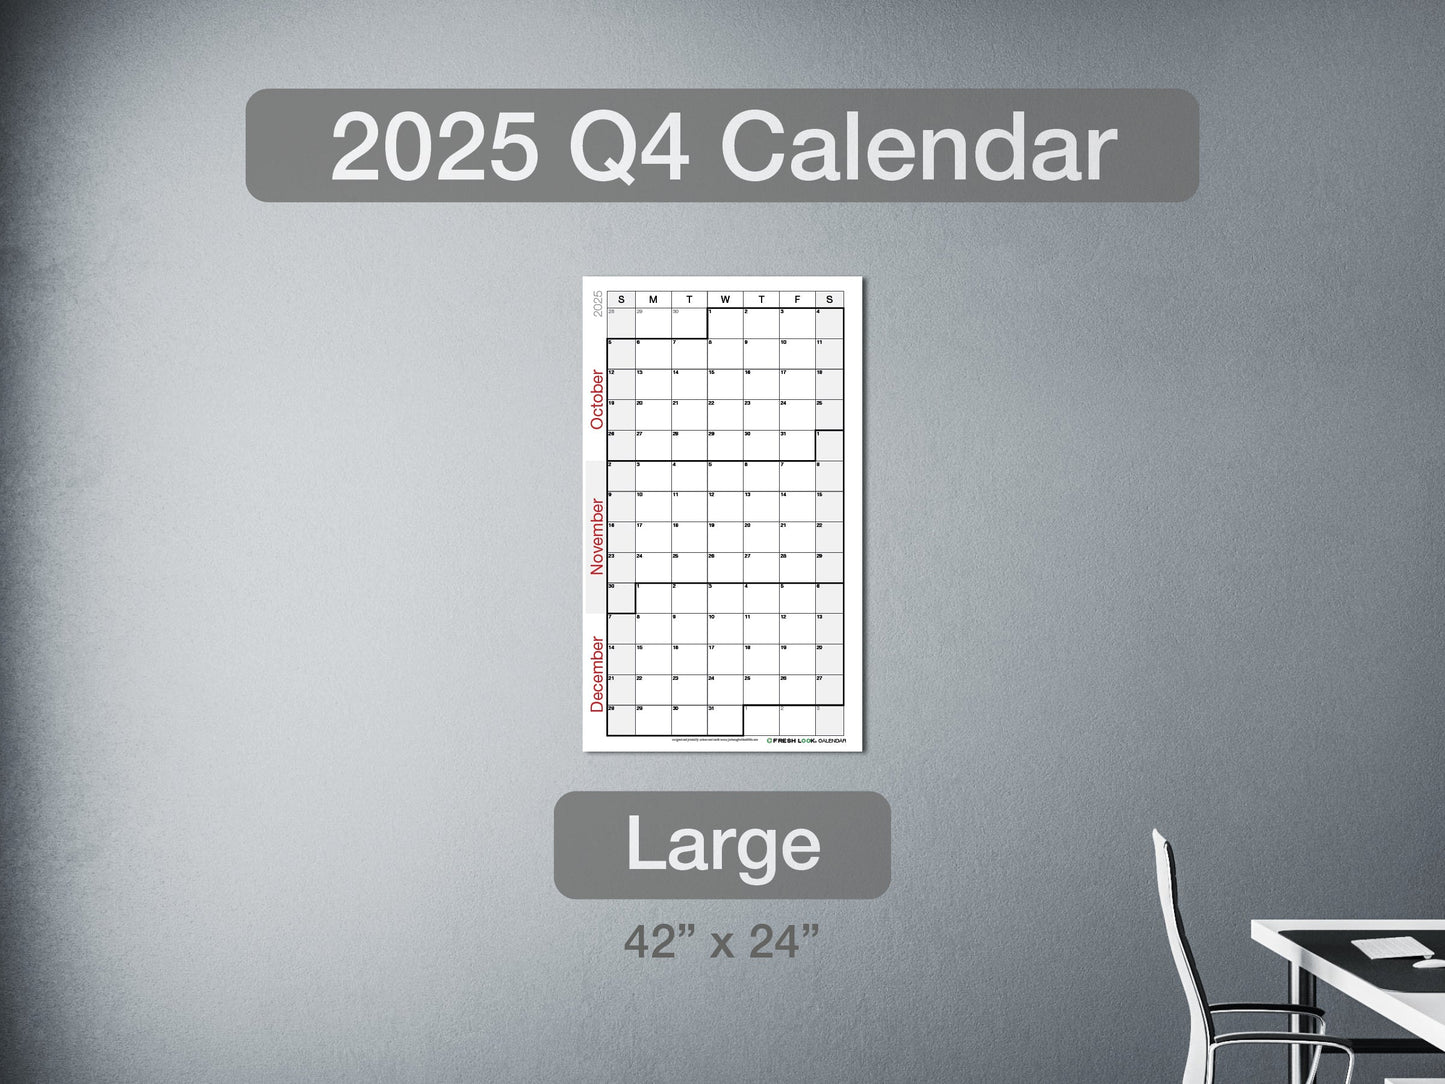 2025 Q4 Calendar Large